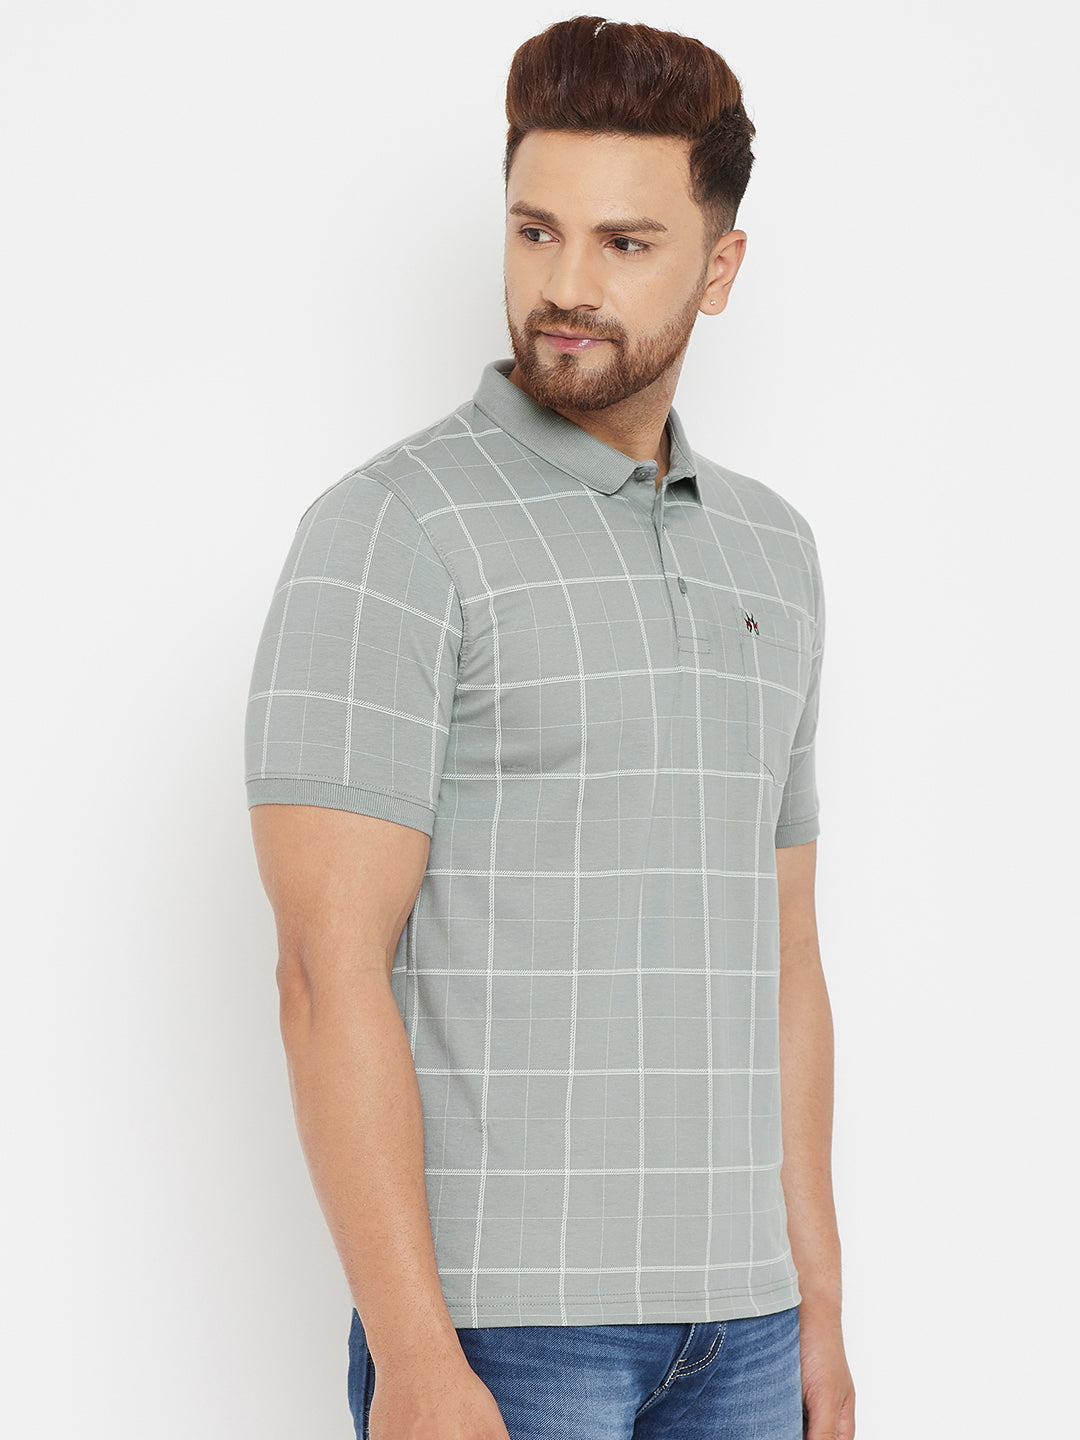 Grey Checked Polo T-Shirt - Men T-Shirts